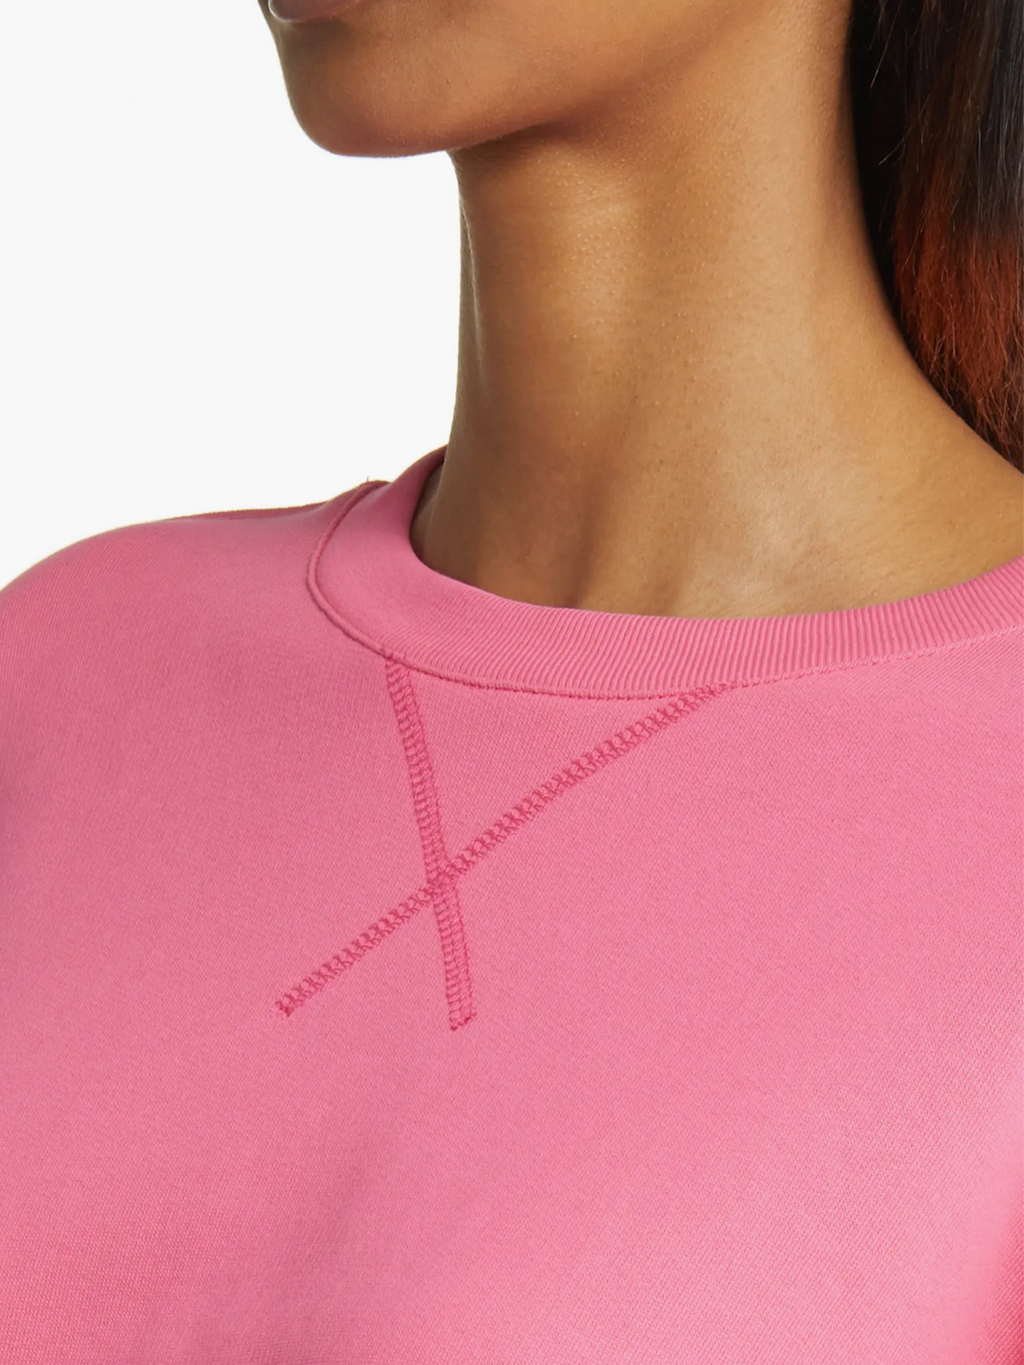 Easy Shirttail Sweatshirt in Flamingo